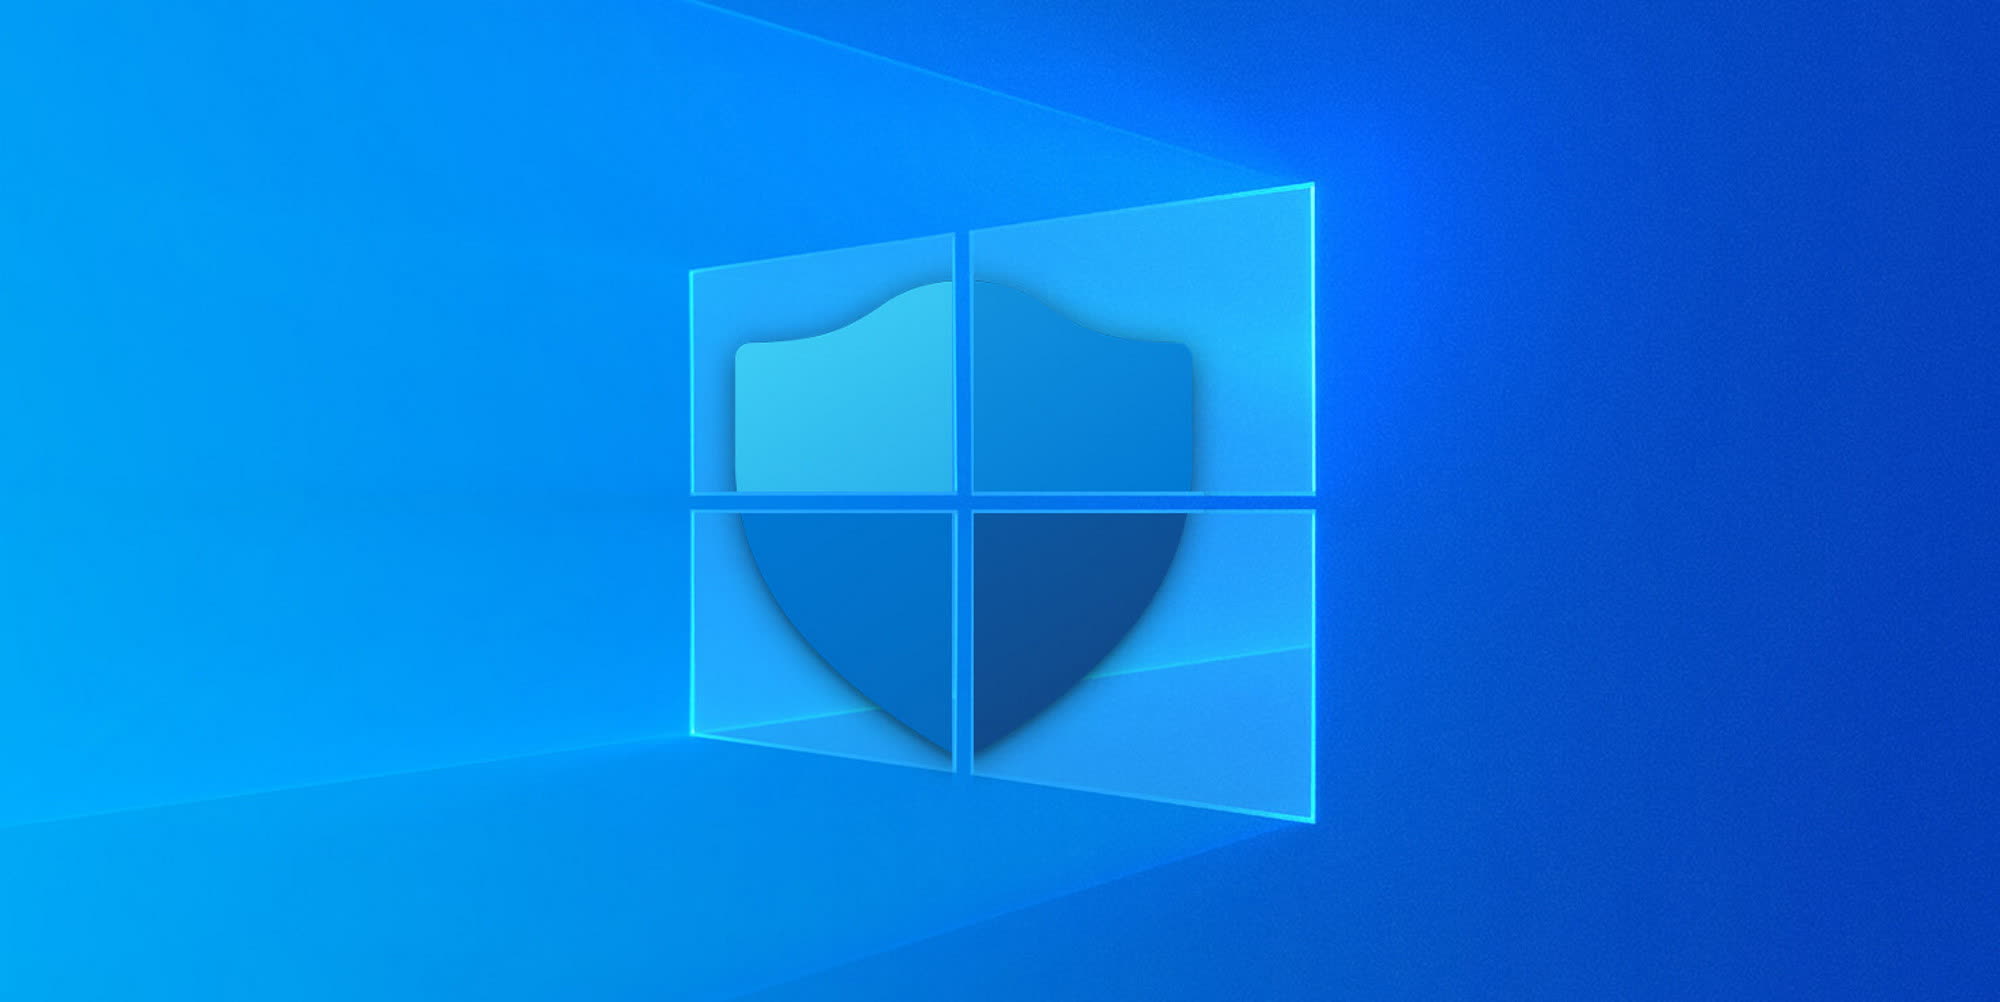 Examination of 18 antivirus programs shows Microsoft Defender has the highest system load